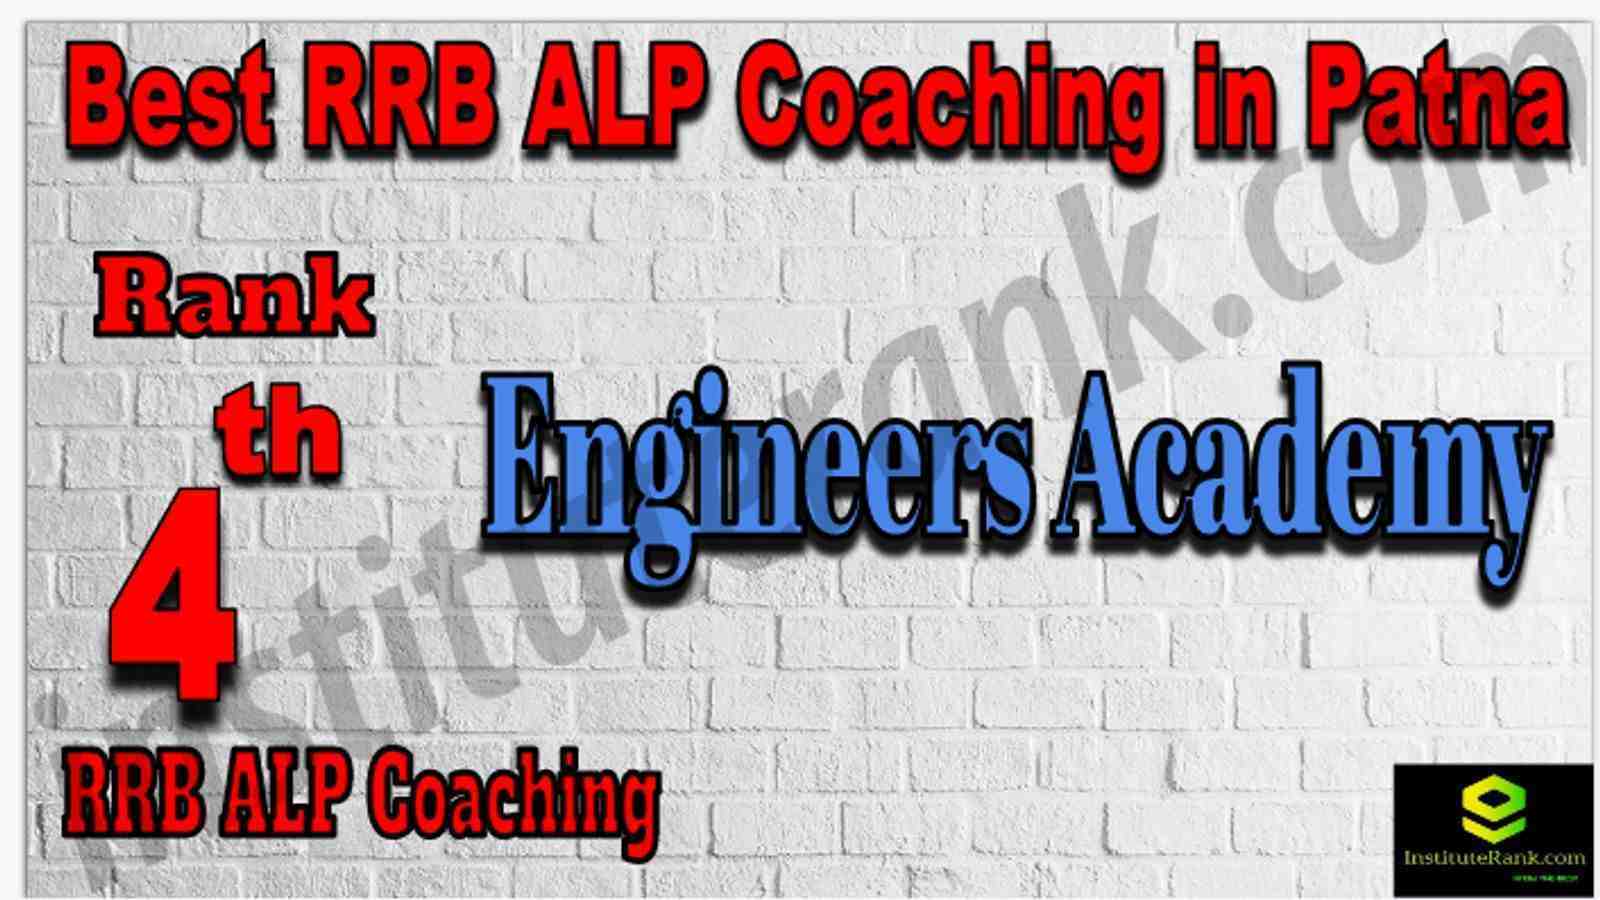 Rank 4th RRB ALP Coaching in Patna